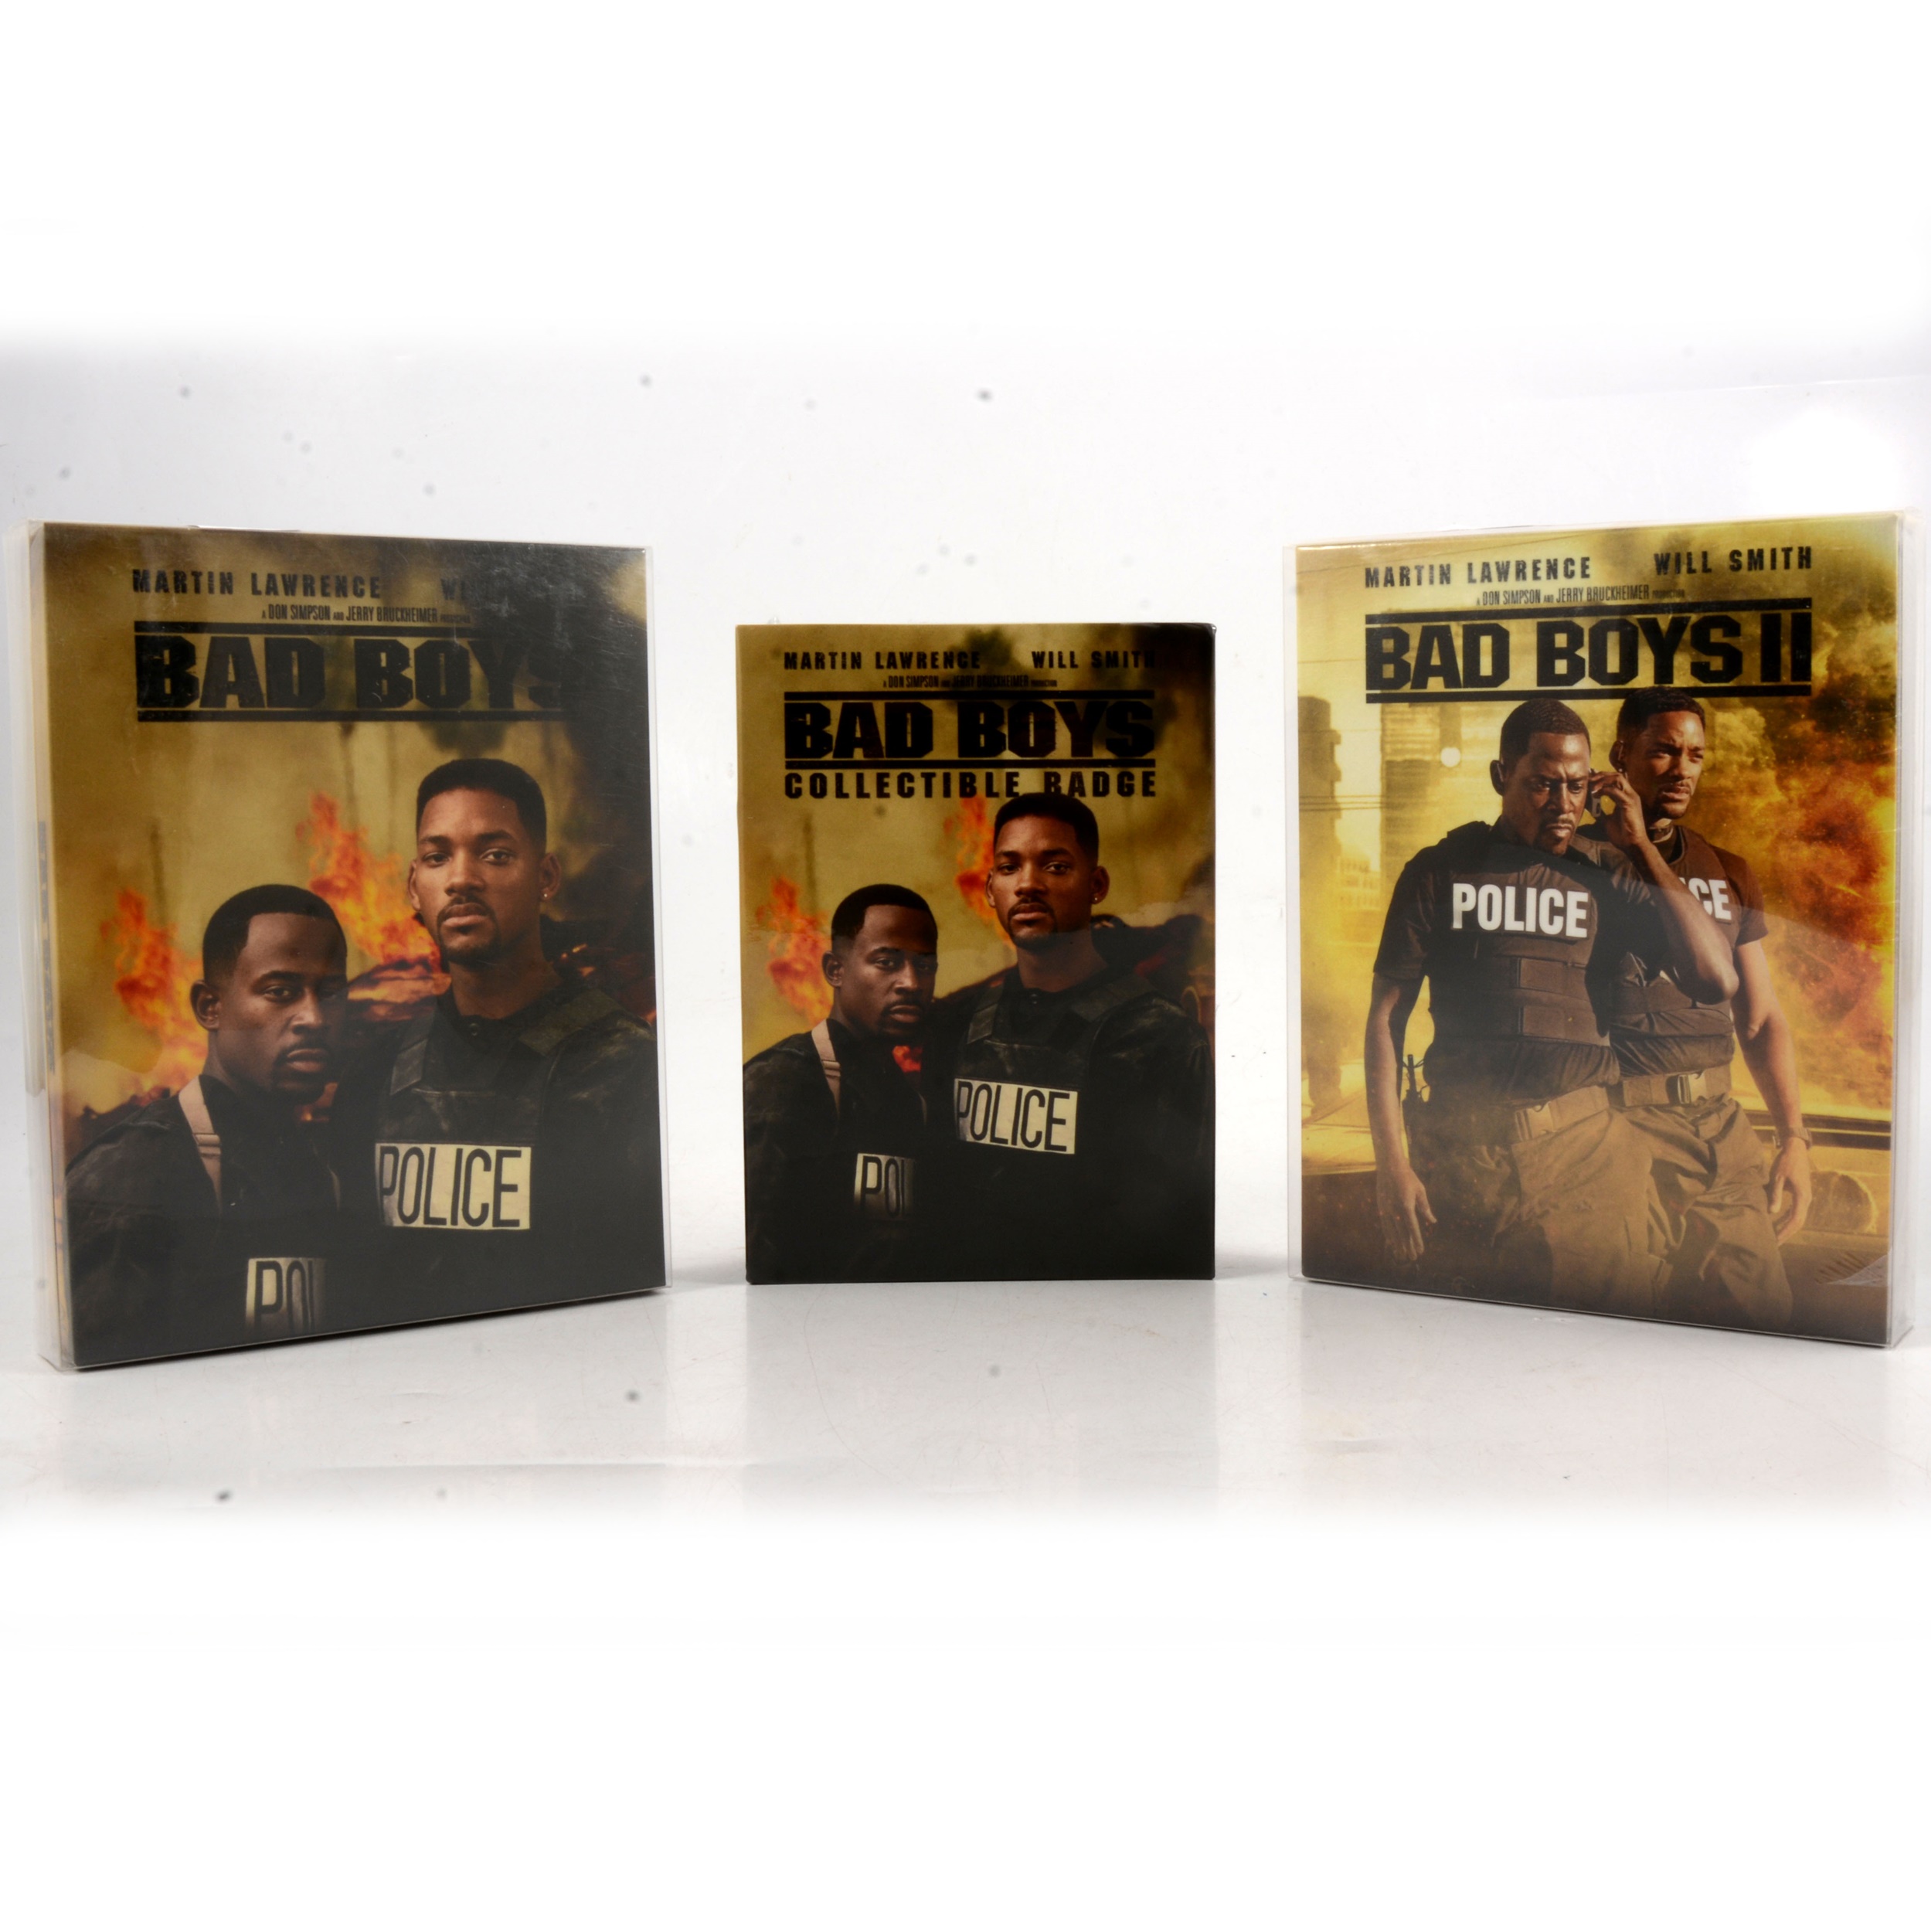 Filmarena Steelbook Blu-rays, two, Bad Boy and Bad Boys II and badge.